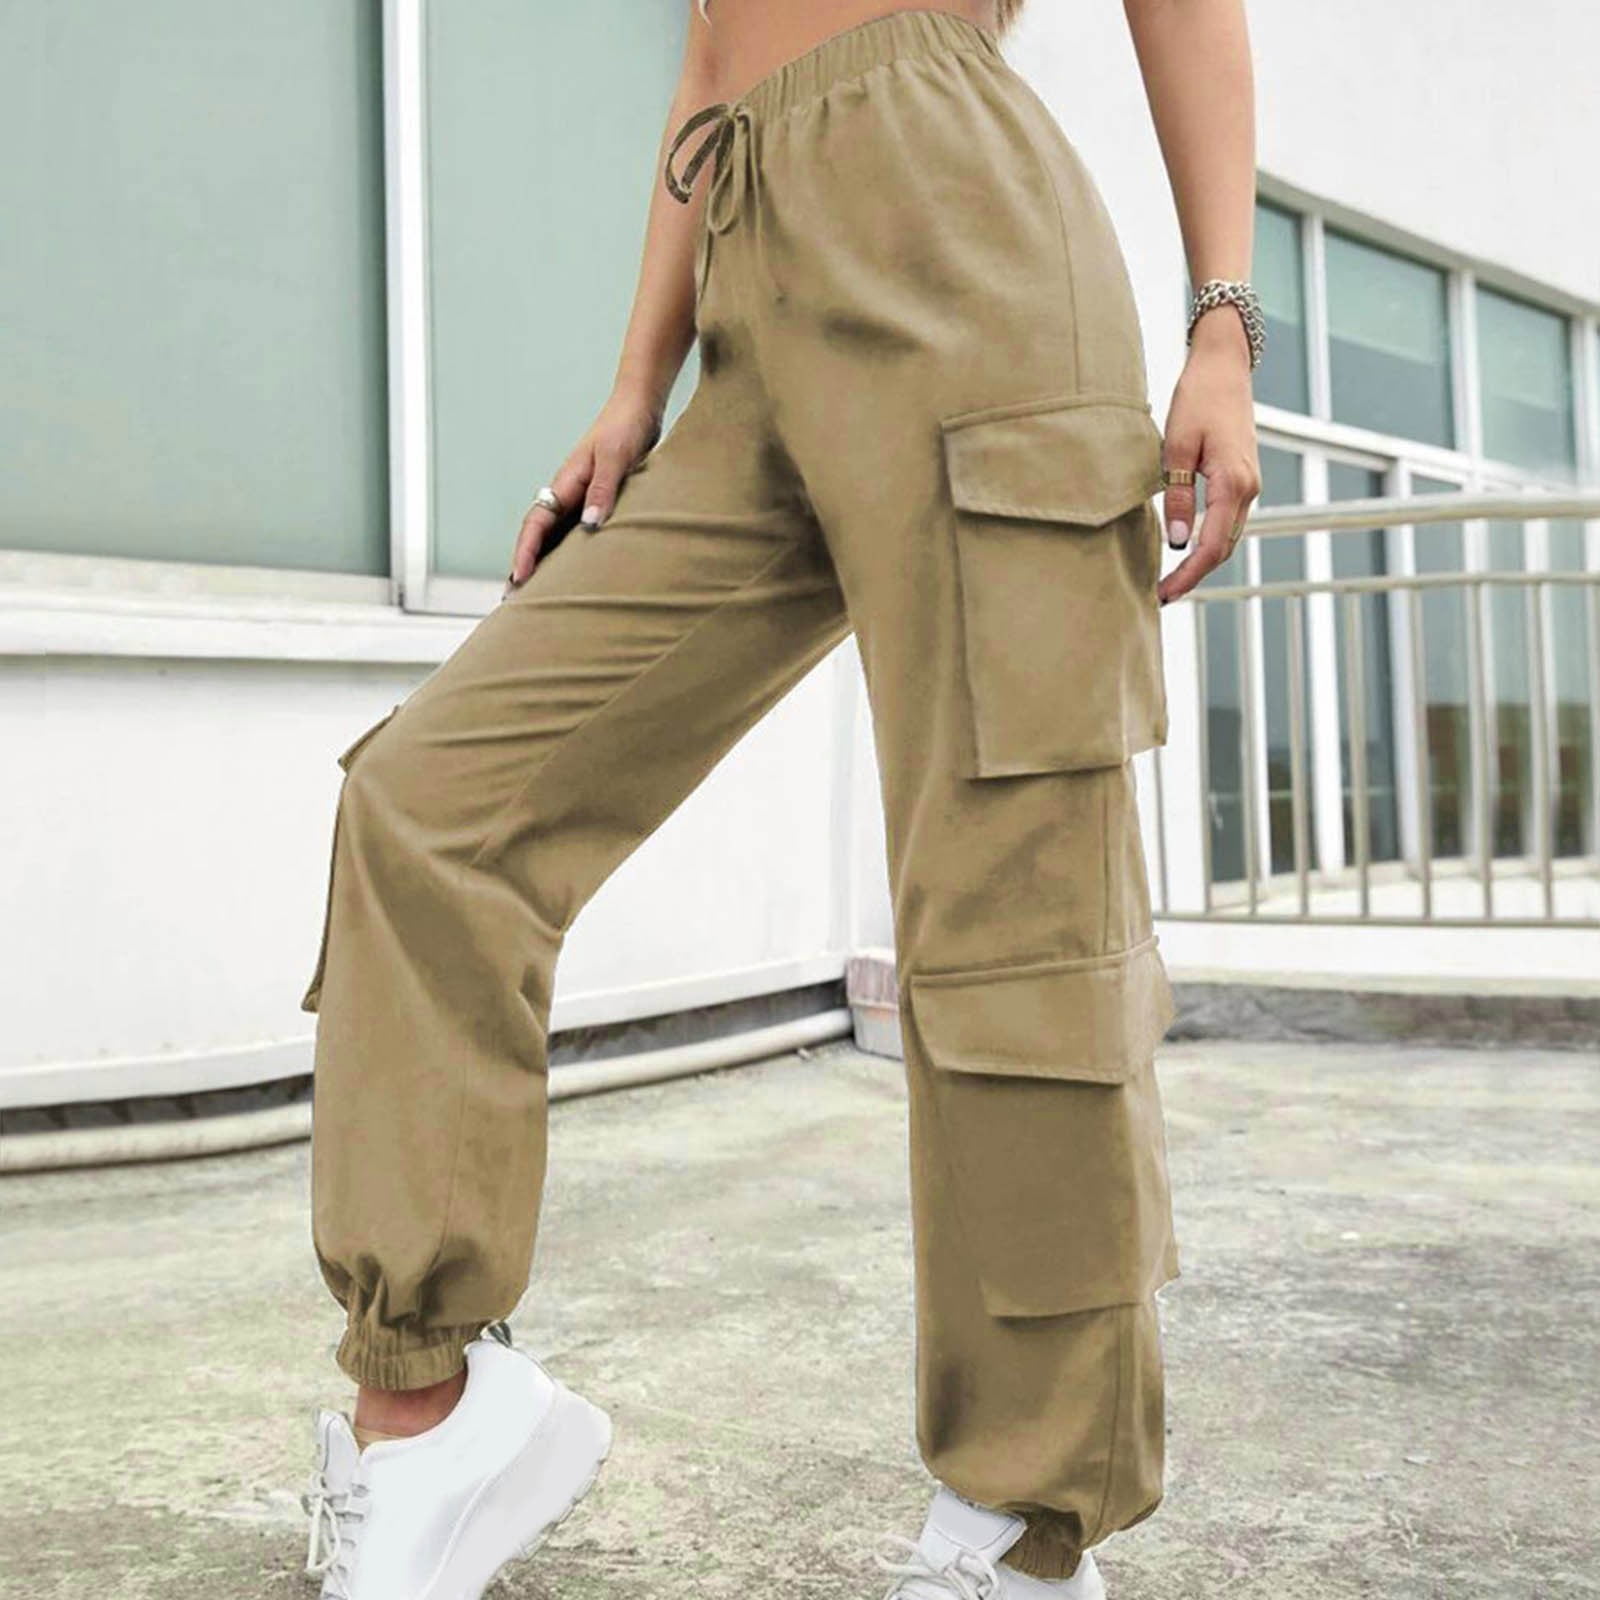 Aayomet Dress Pants Women Pants Pocket Solid Casual Trousers Plus